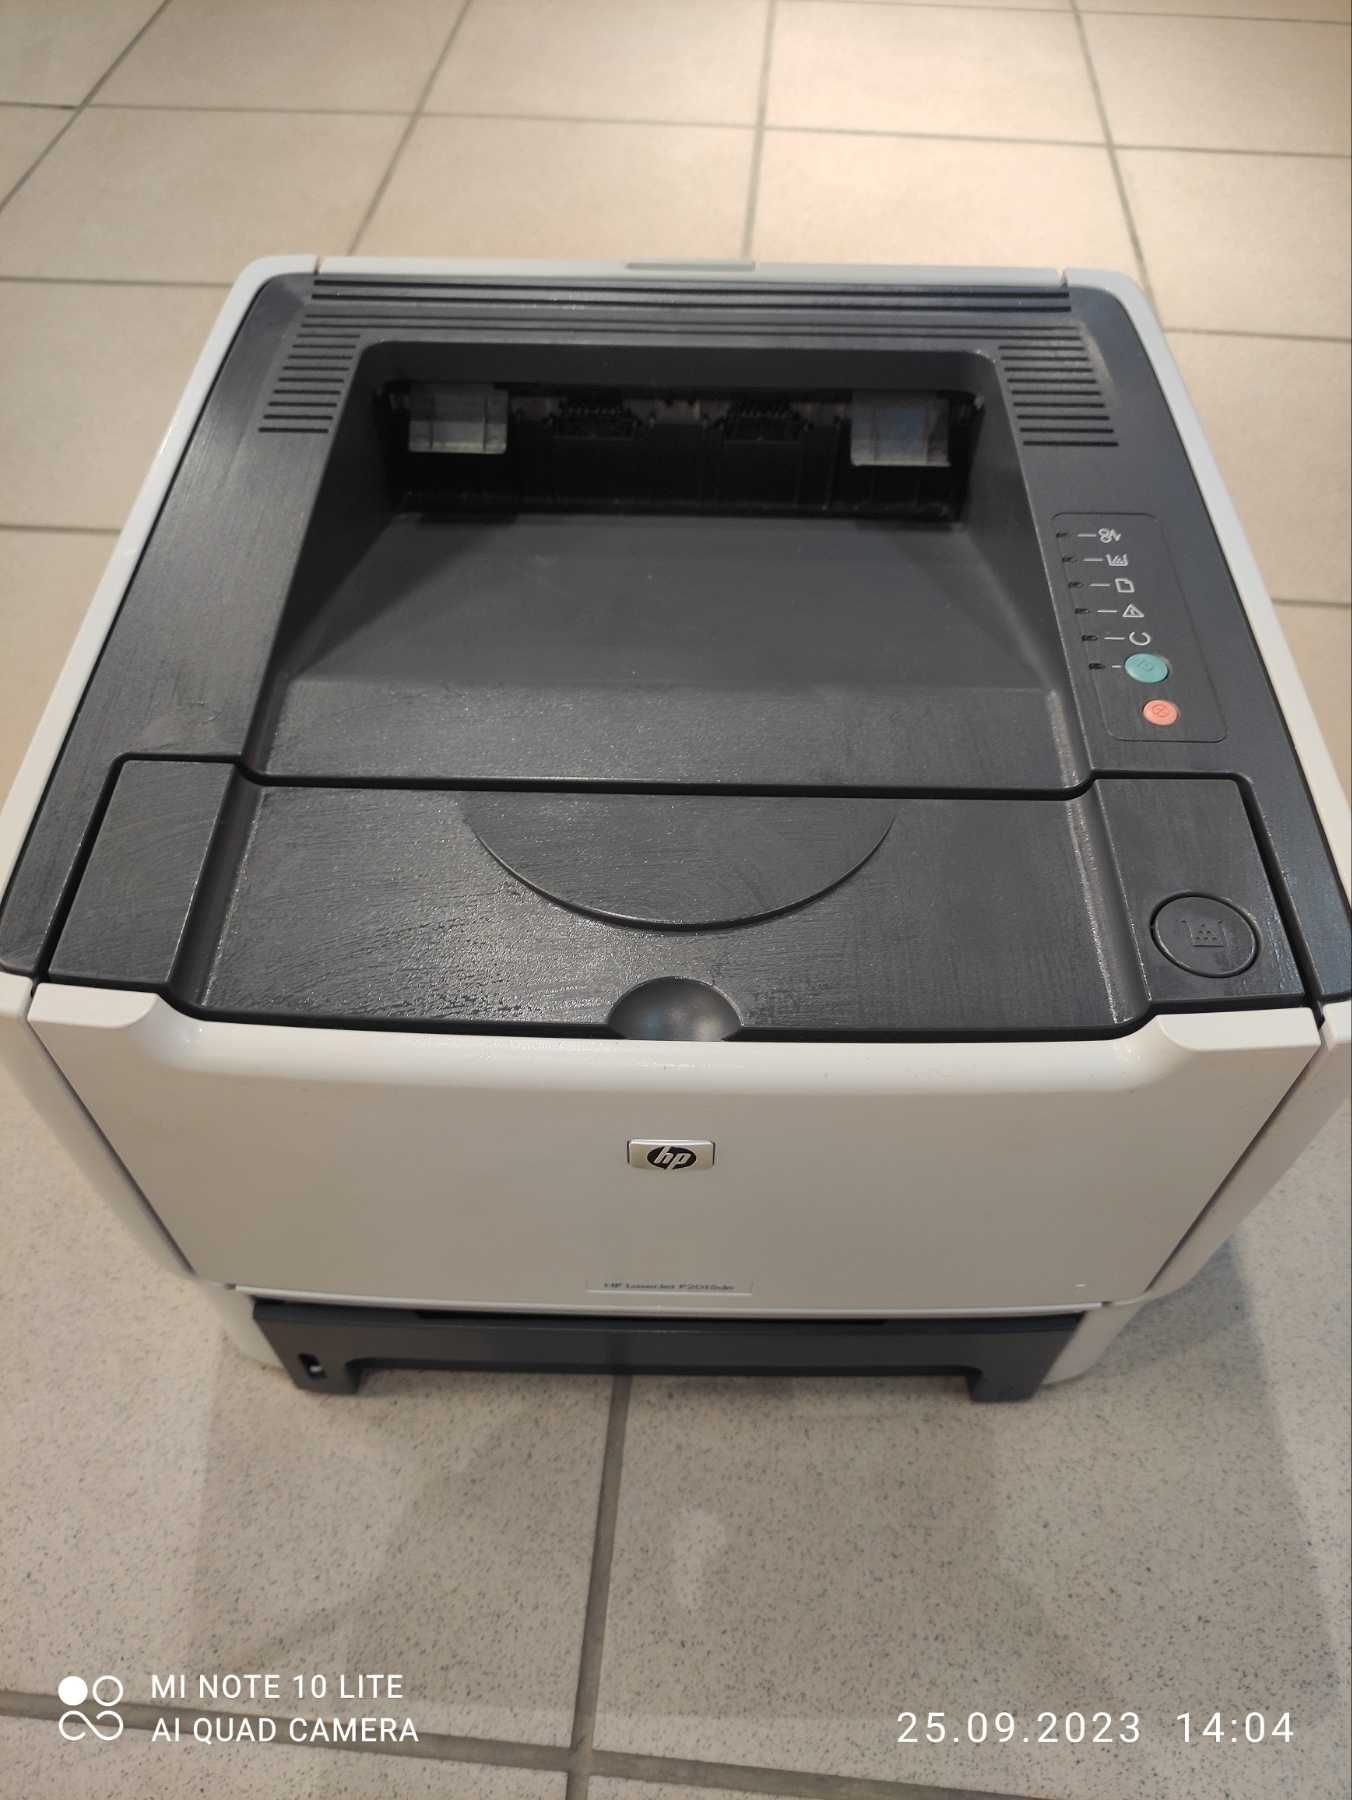 Лазерний принтер HP P2015dn у не рабочому стану